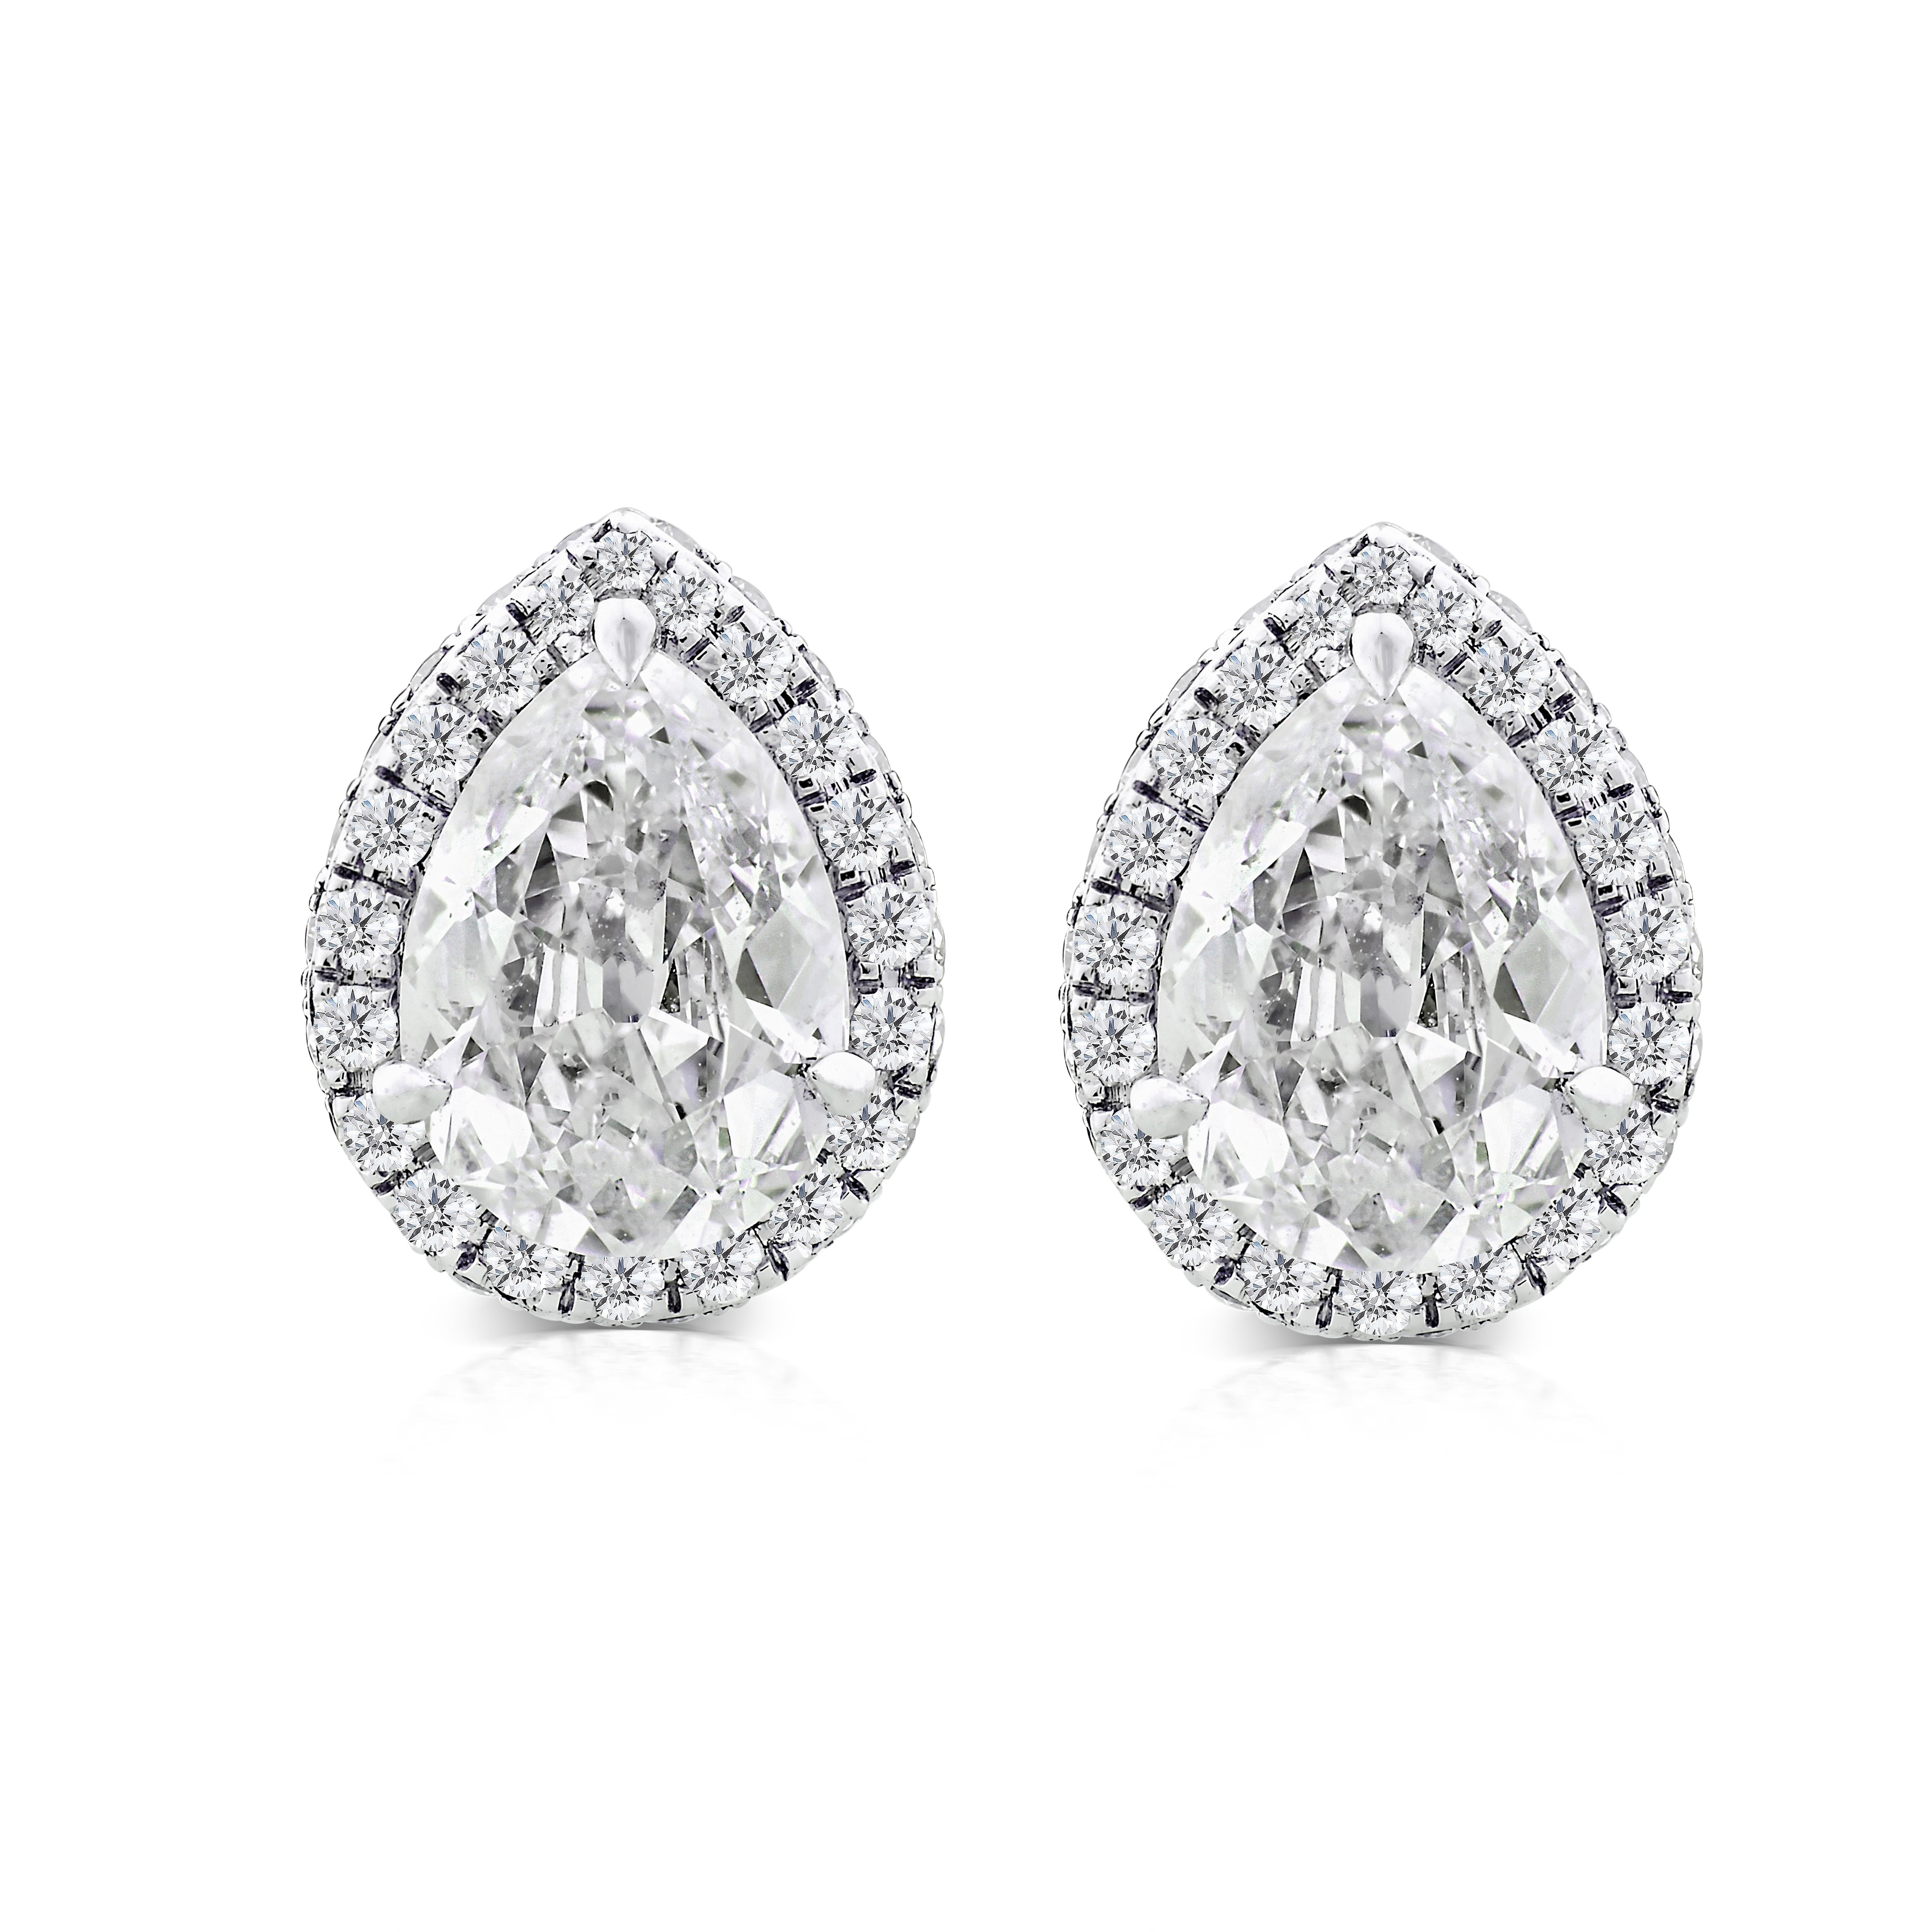 18k Gold 1.57 Ct Old Cut Pear Diamond Halo Earrings Studs Contemporary Earrings